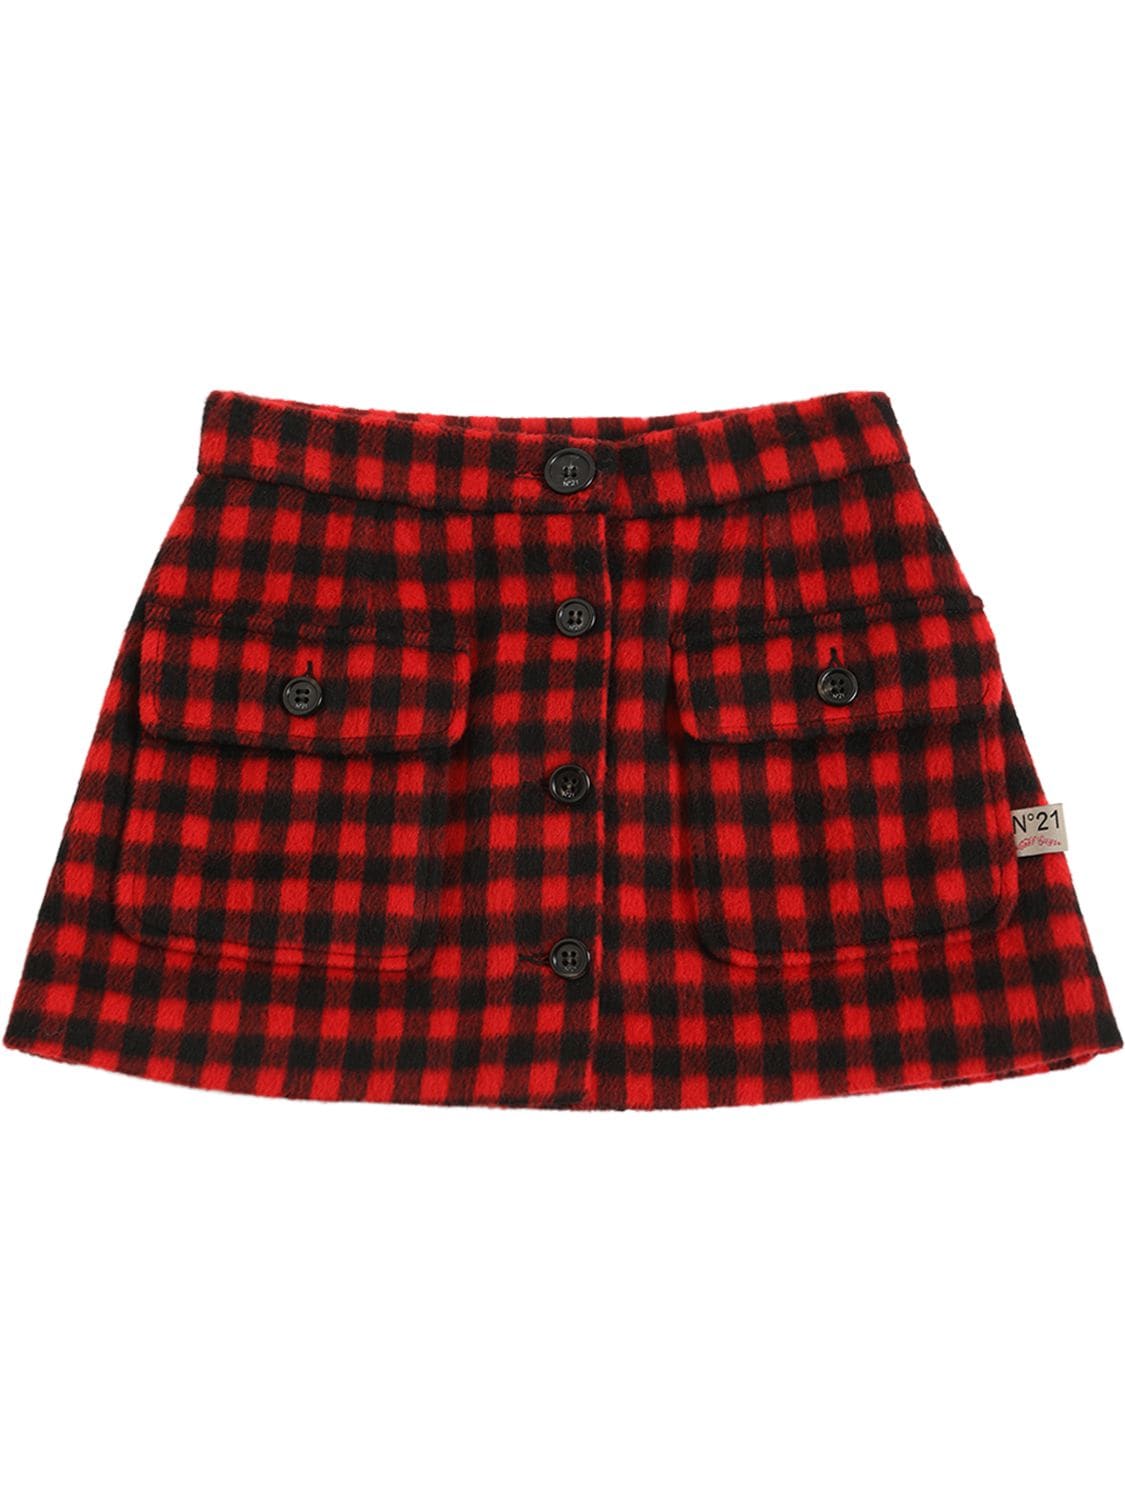 Image of Check Print Wool Blend Mini Skirt